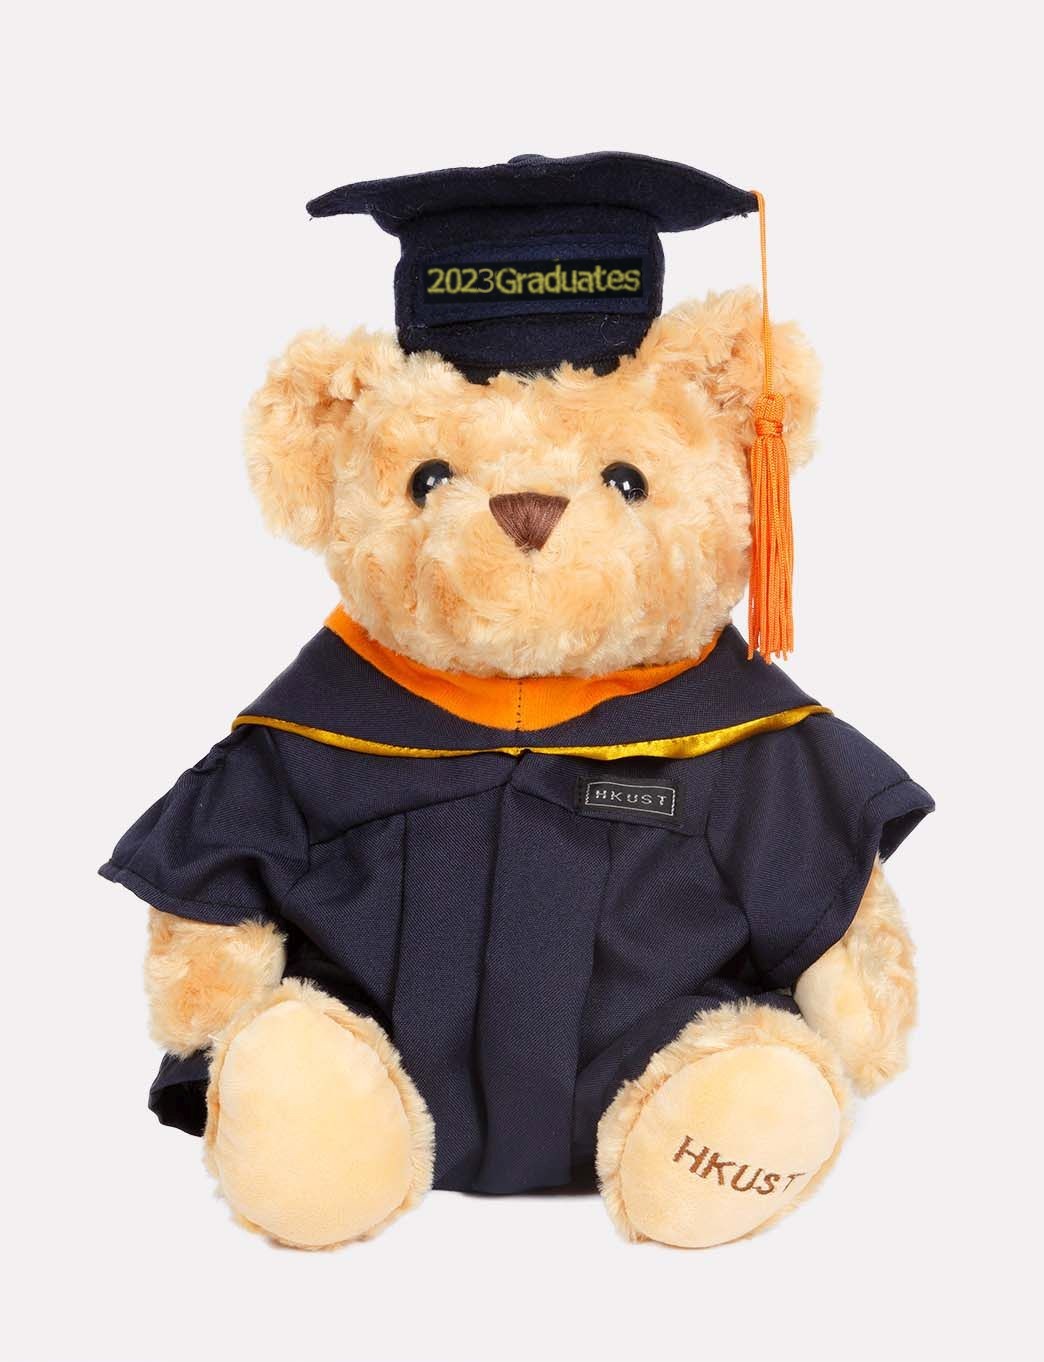 Graduation bear (for various degrees)